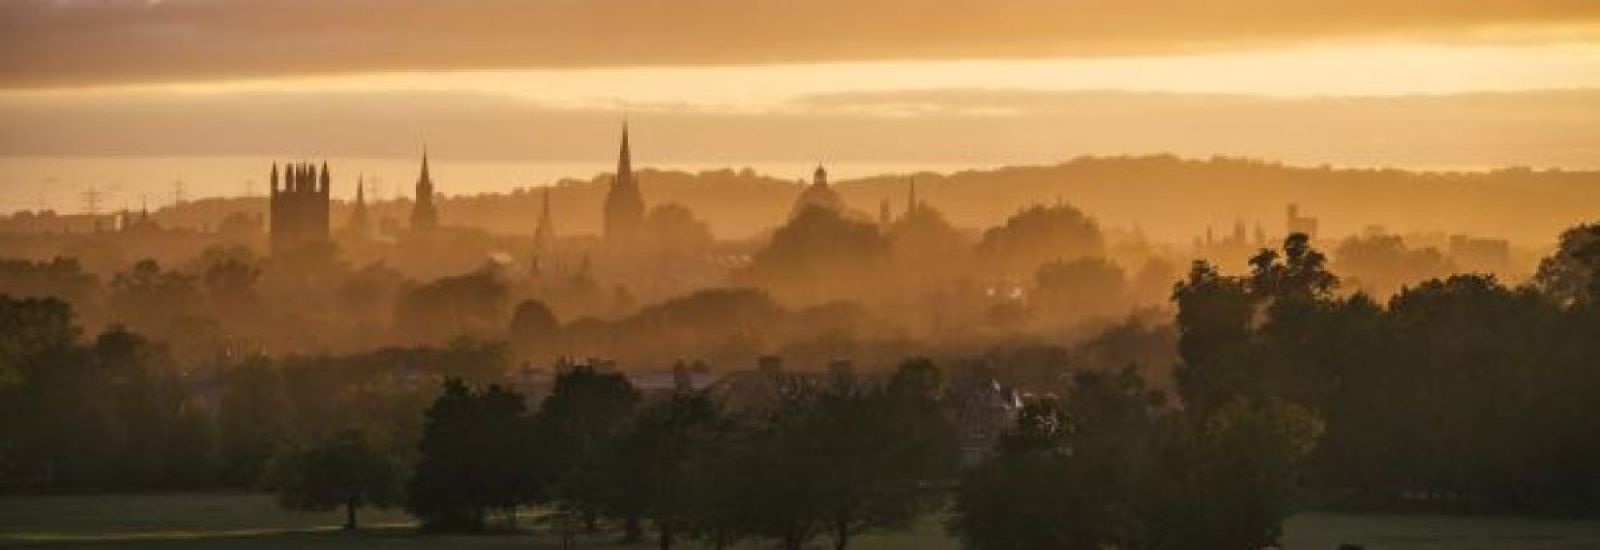 Oxford skyline in sunset.